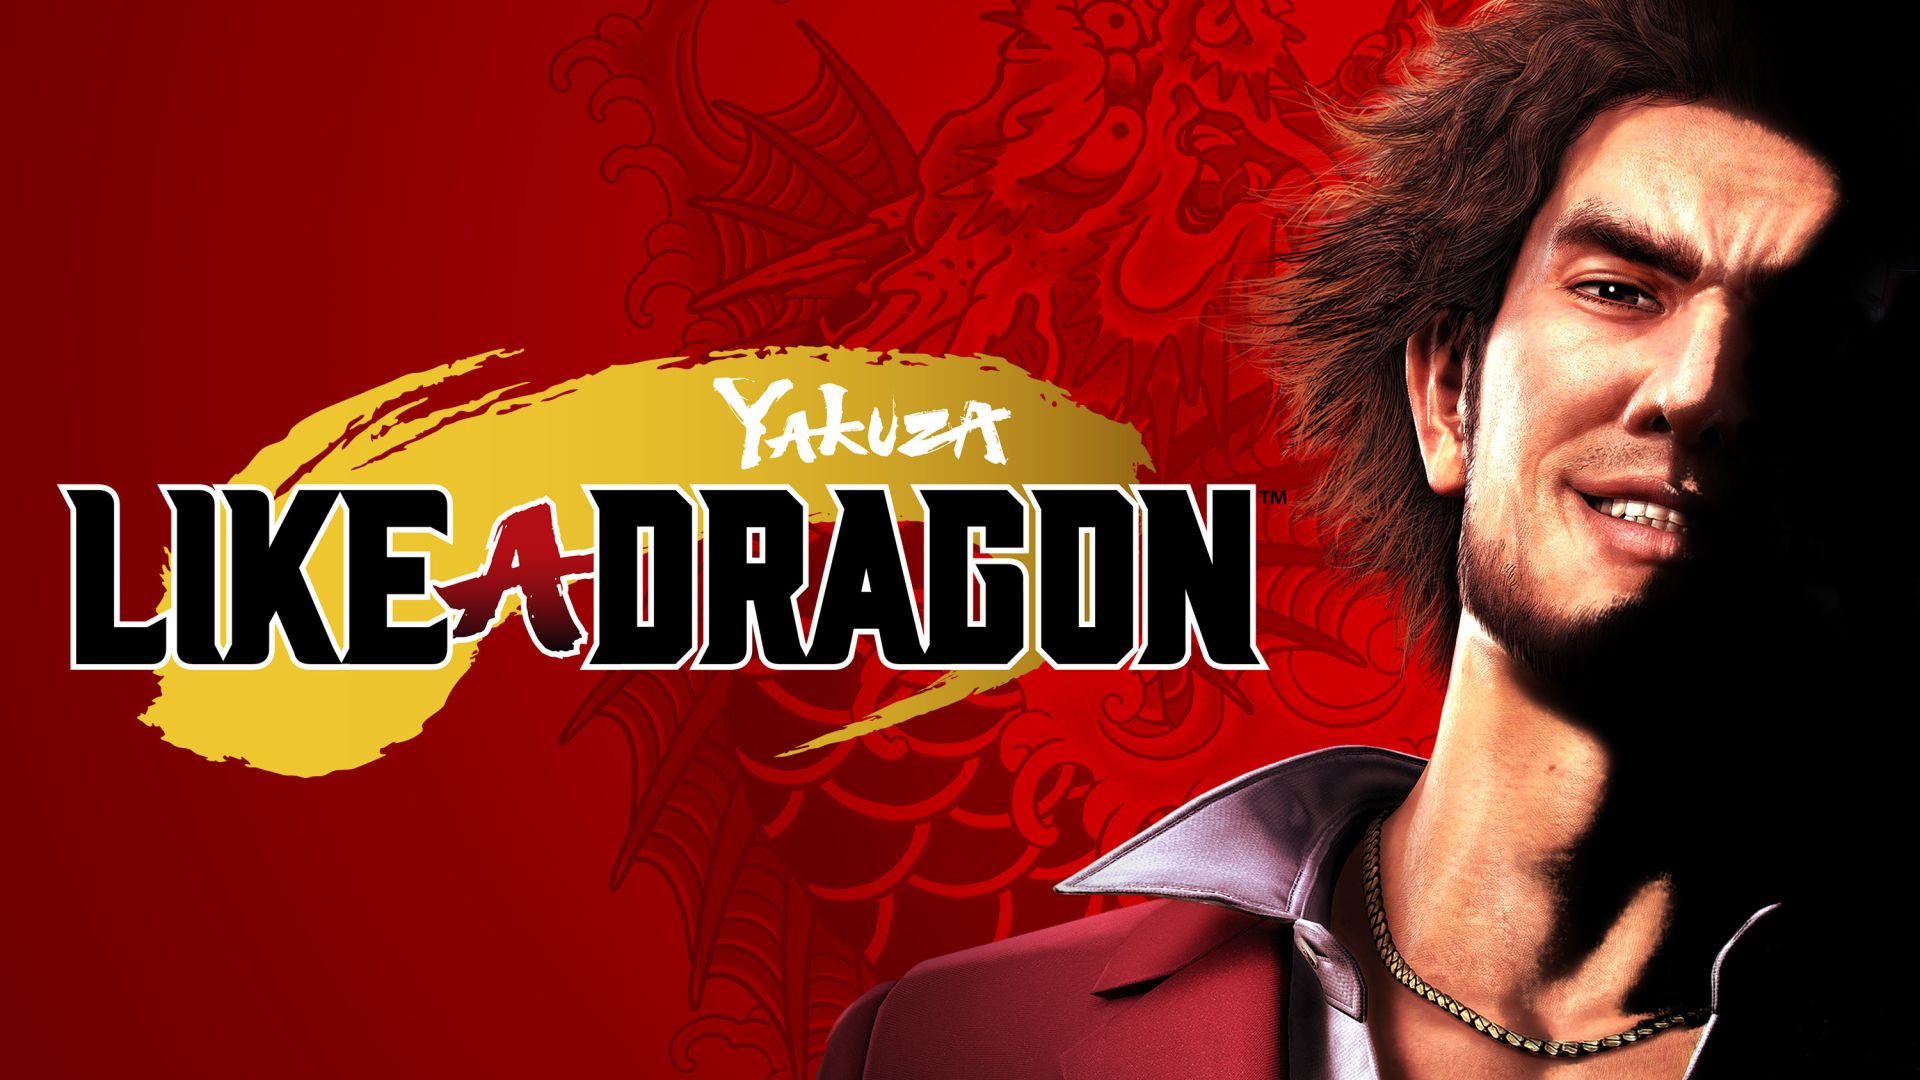 Yakuza Like a Dragon Key Art 1080P Laptop Full HD Wallpaper, HD Games 4K Wallpaper, Image, Photo and Background